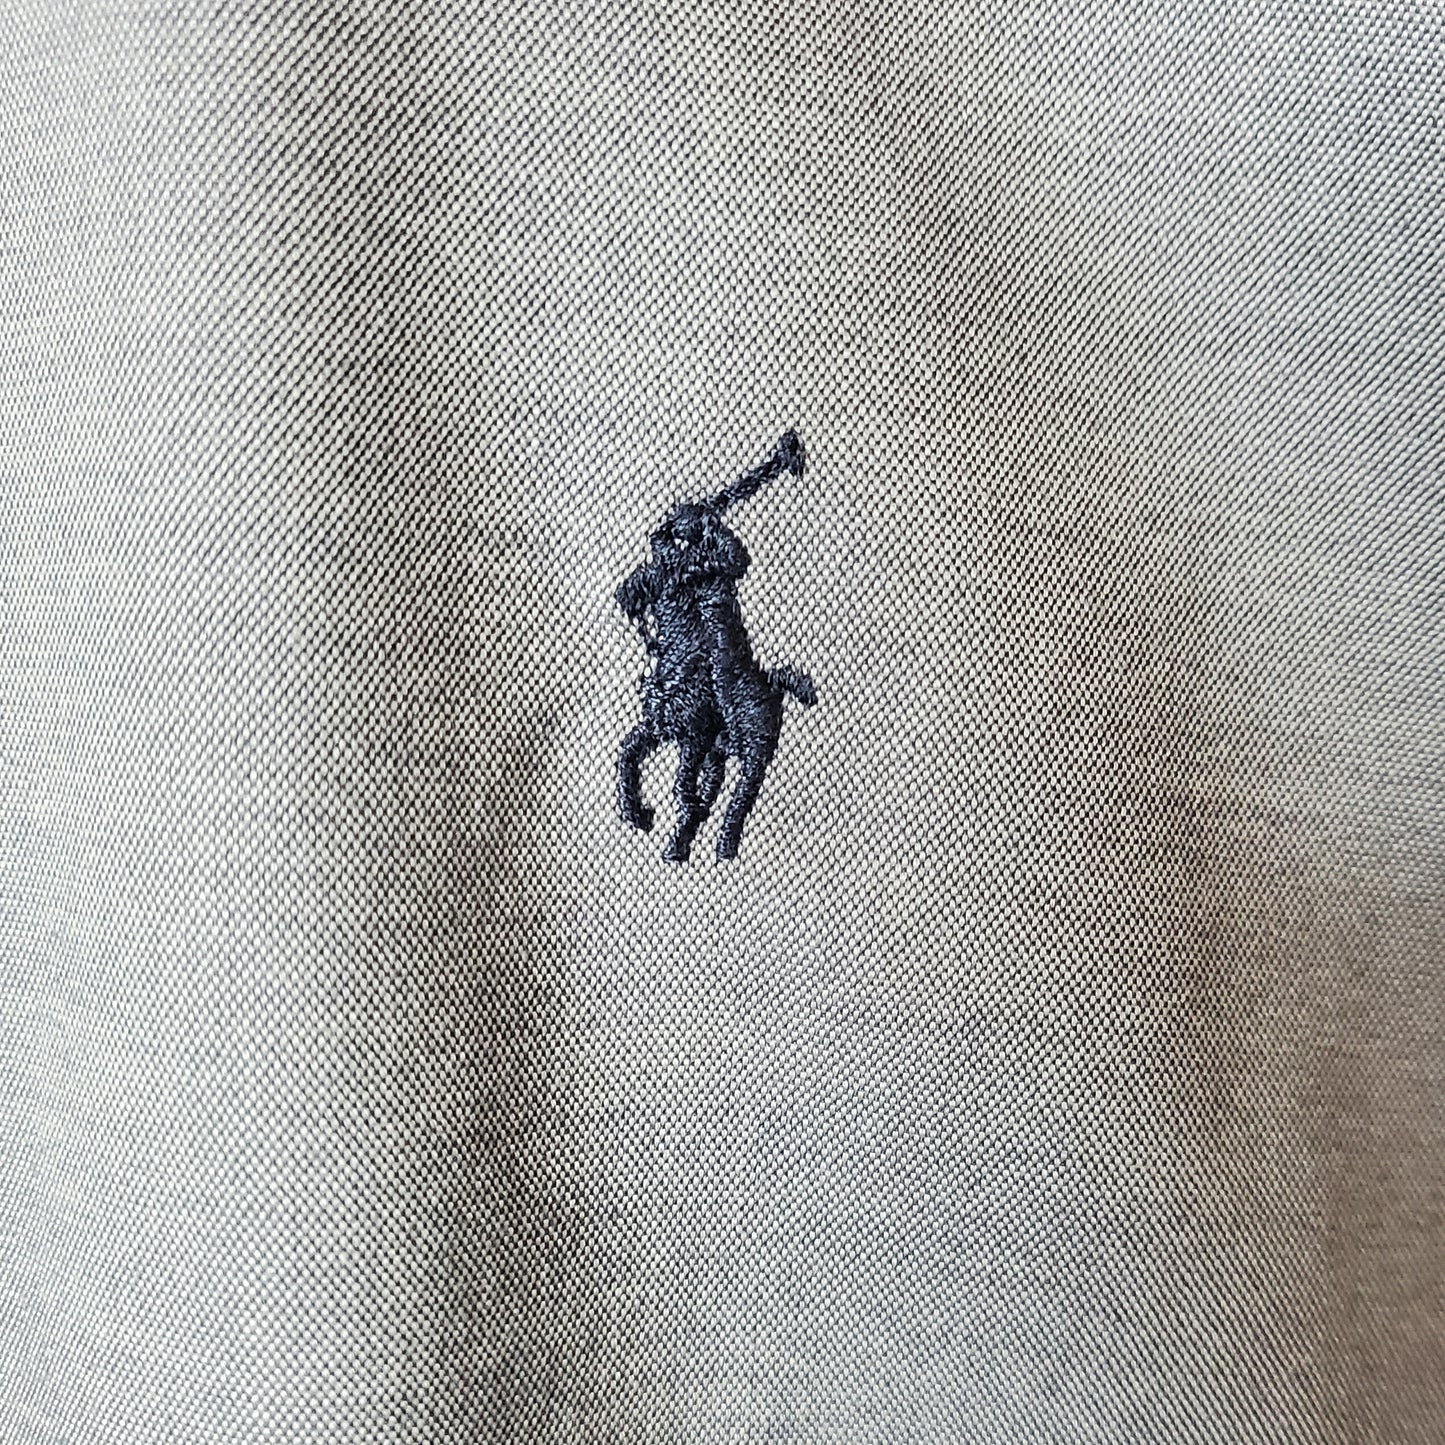 Vintage Upcycled Women's Ralph Lauren Smock Shirt Grey Size 6-8